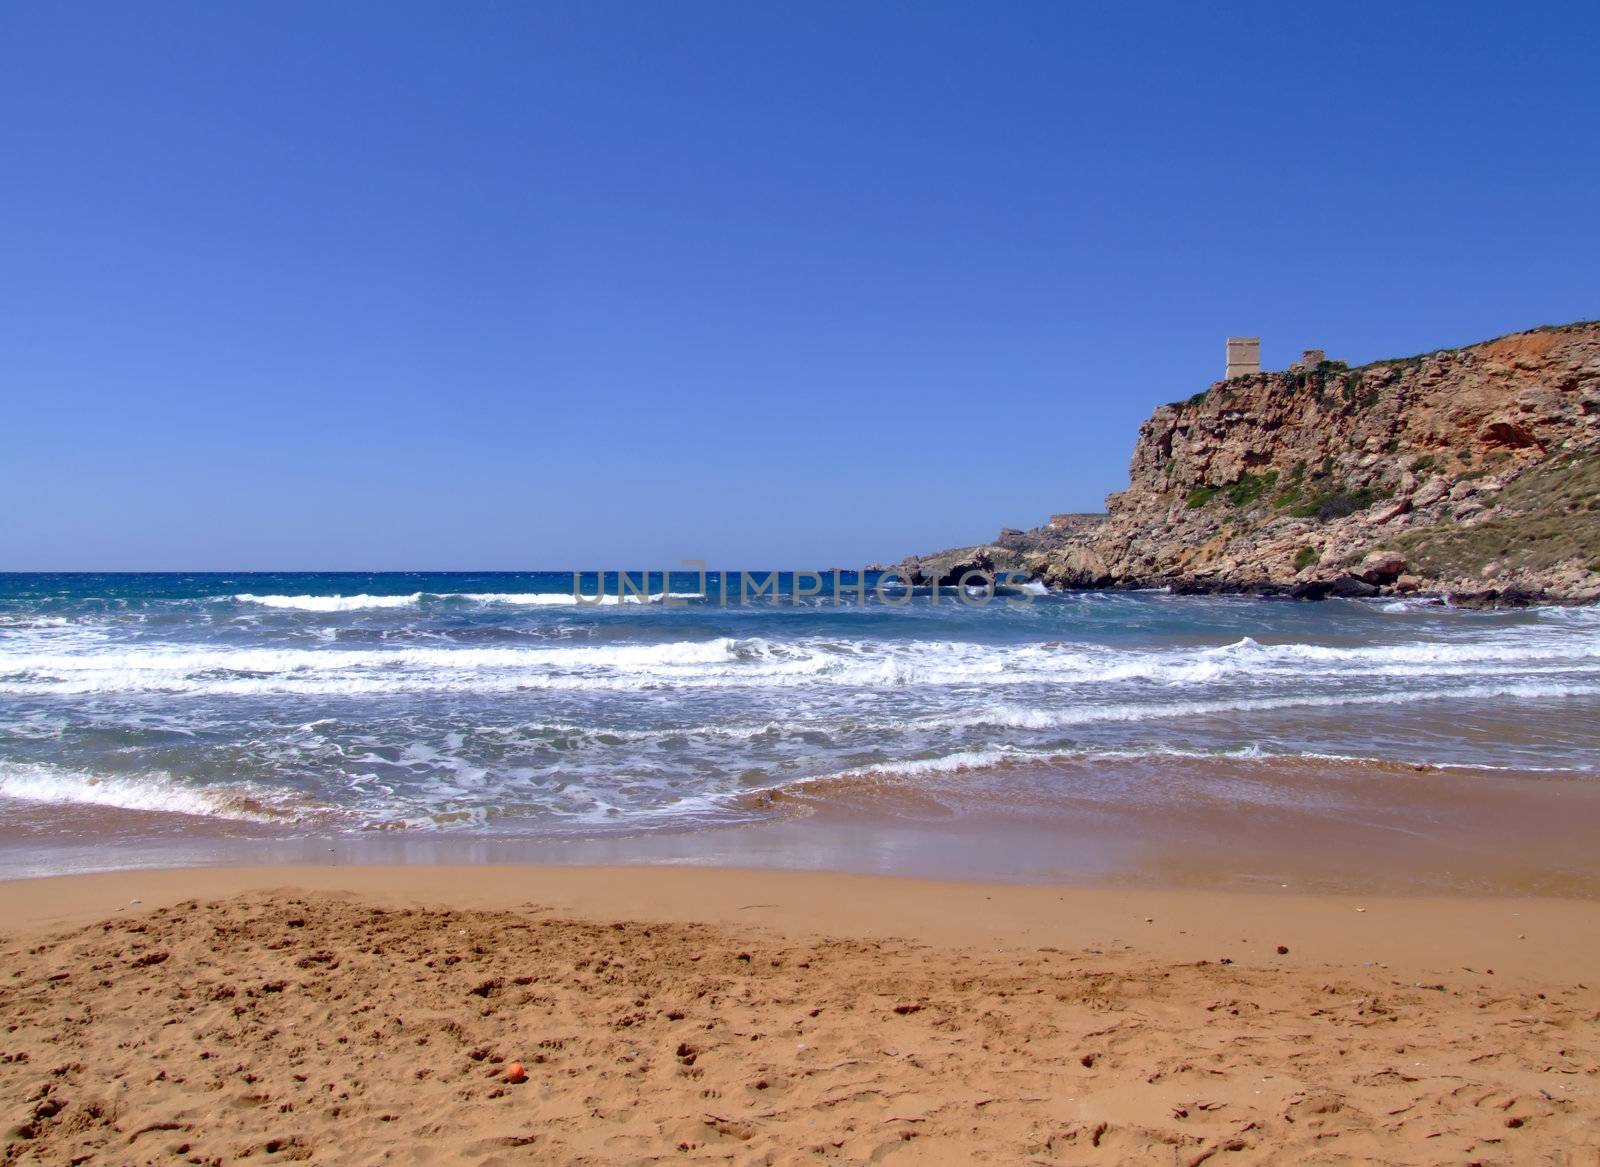 Beautiful Mediterranean beach on the island of Malta